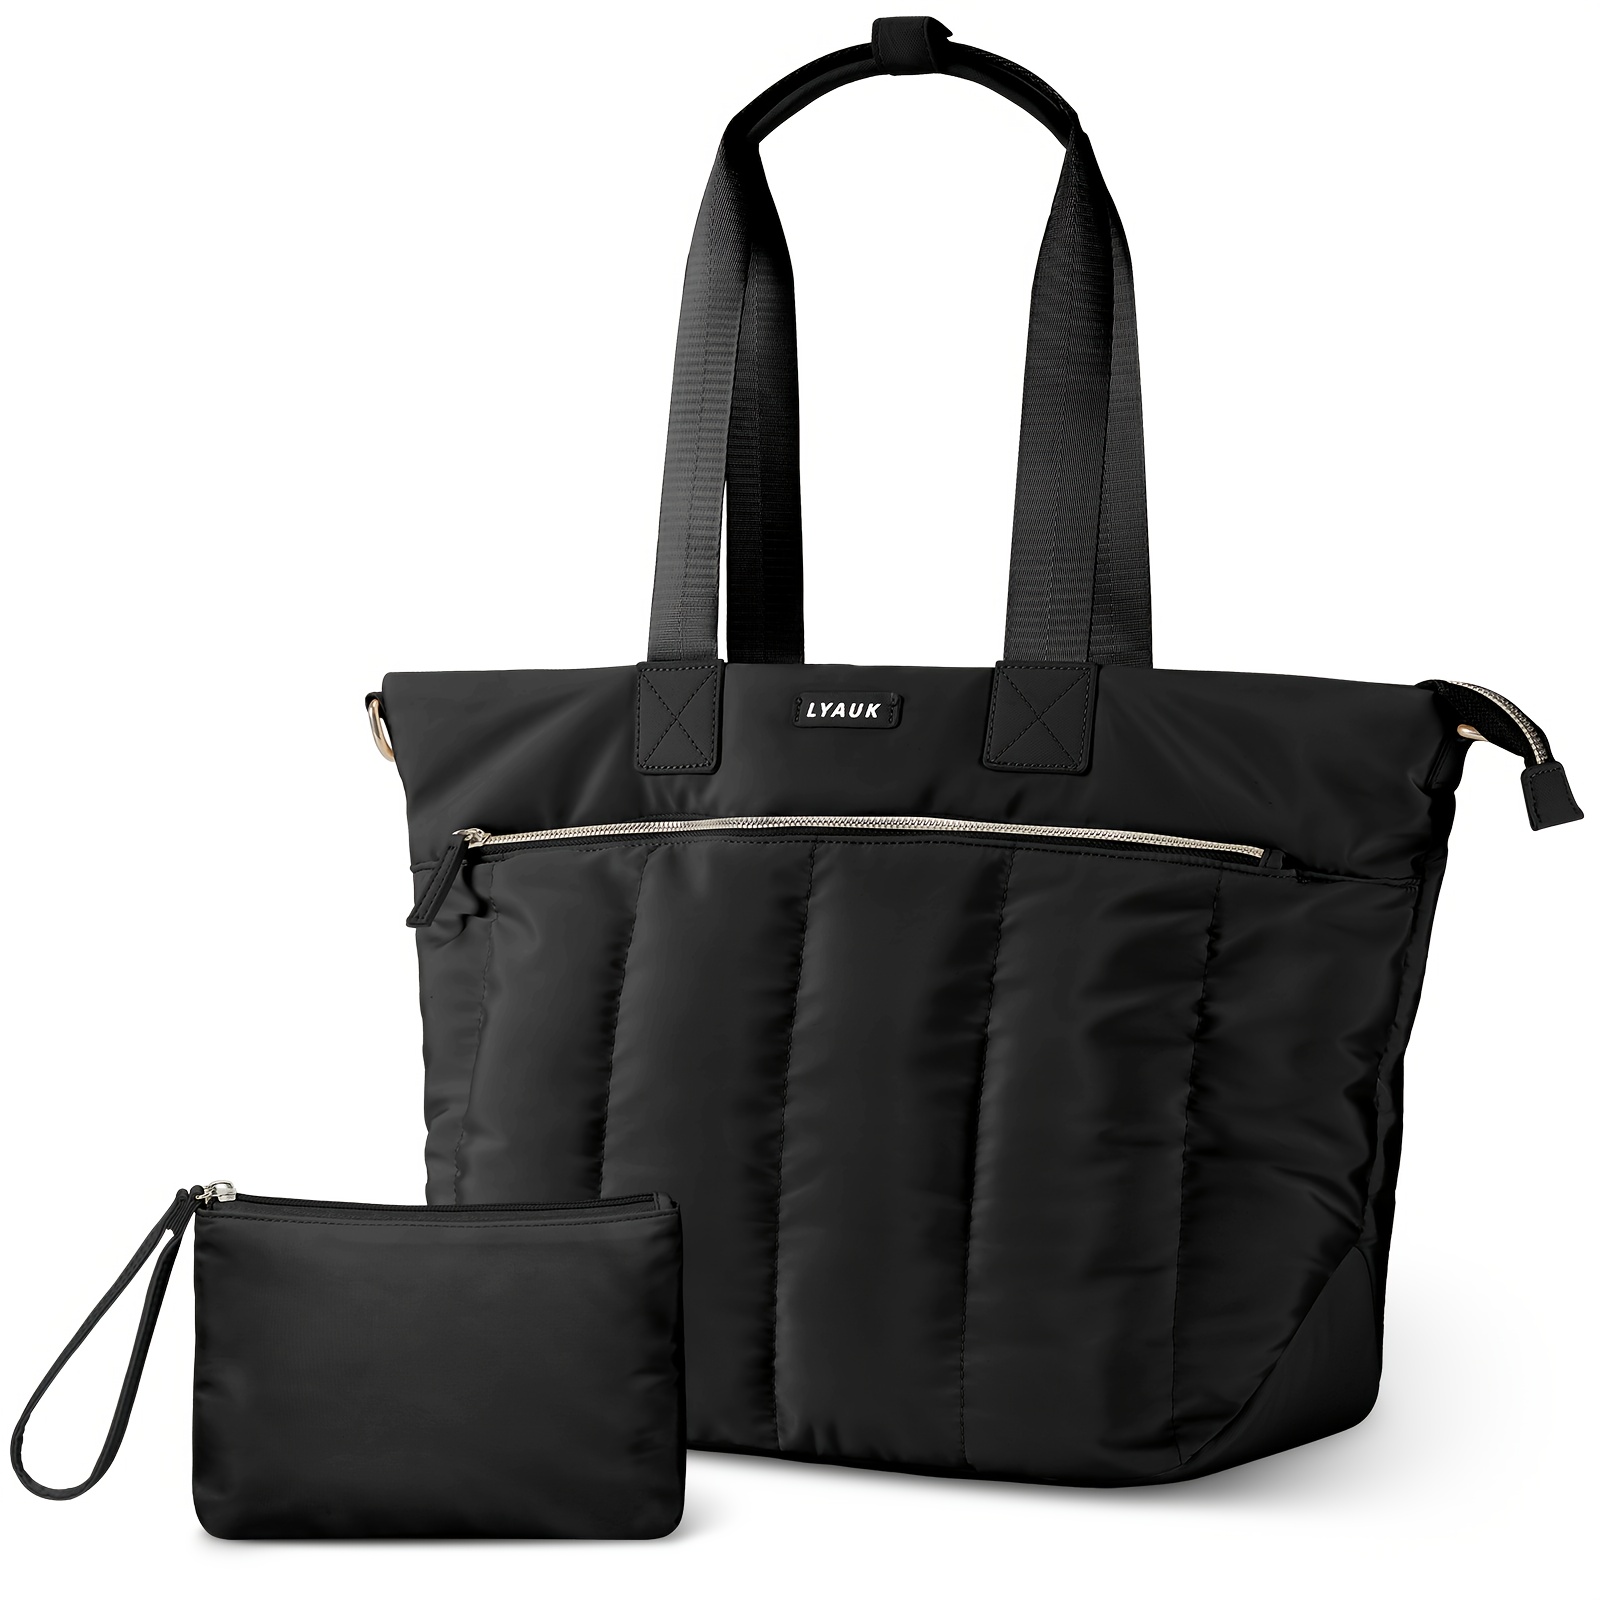 Victoria's Secret Bag For Women,Black - Handbags Sets price in UAE,   UAE